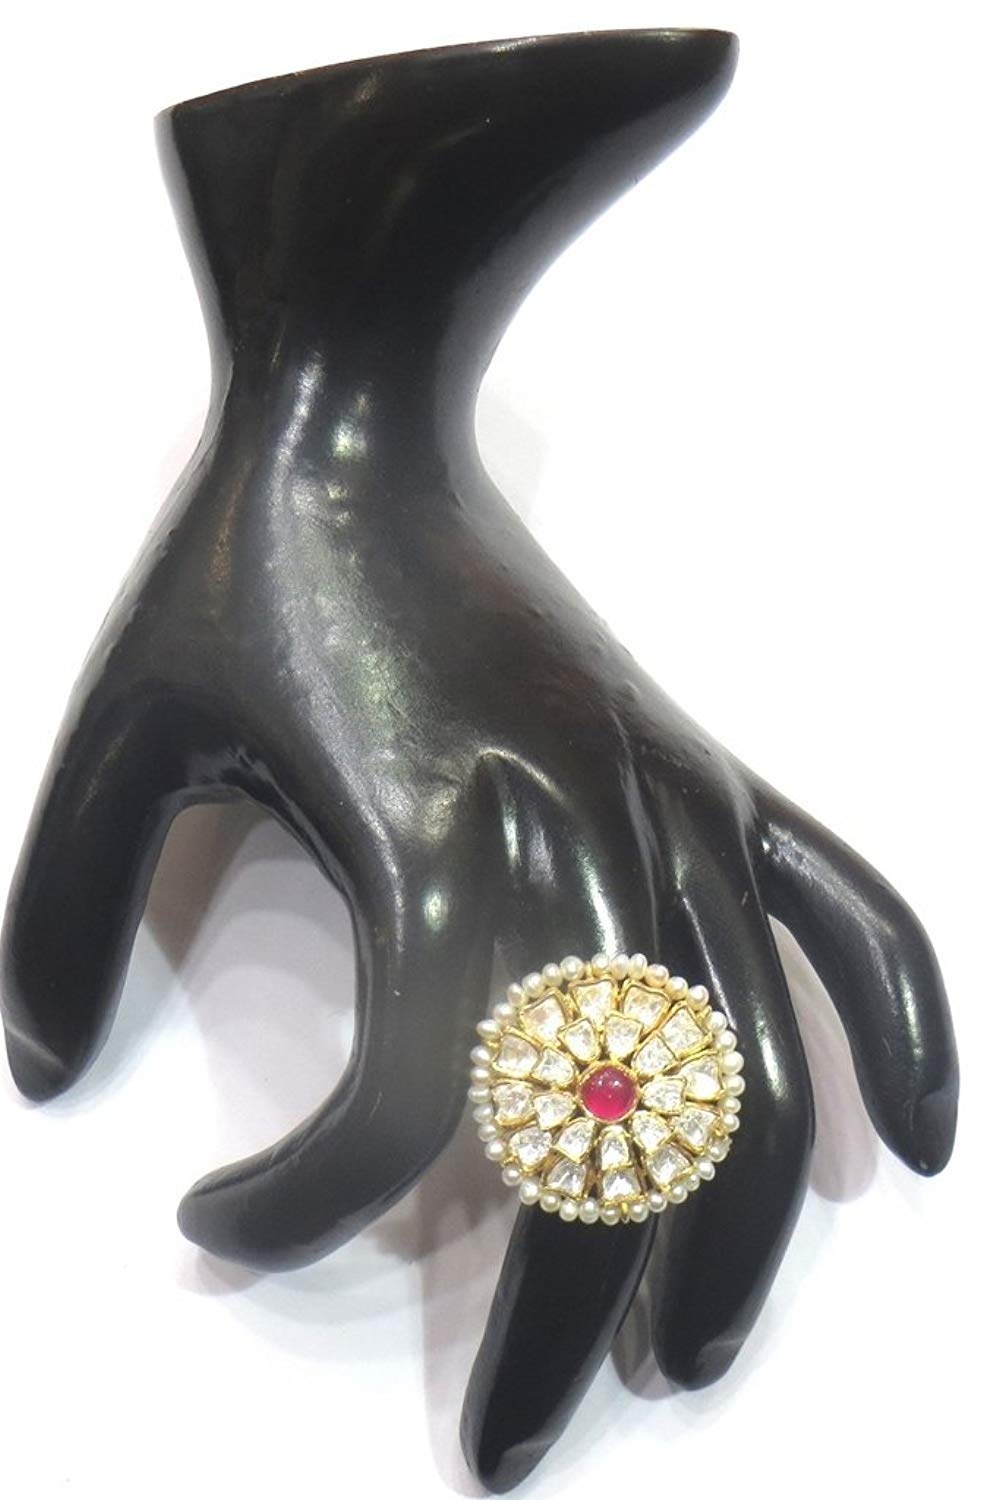 Jewelshingar Jewelry Fine 92.5 % Sterling Silver Ring For Women ( 37993-ssr-ruby )